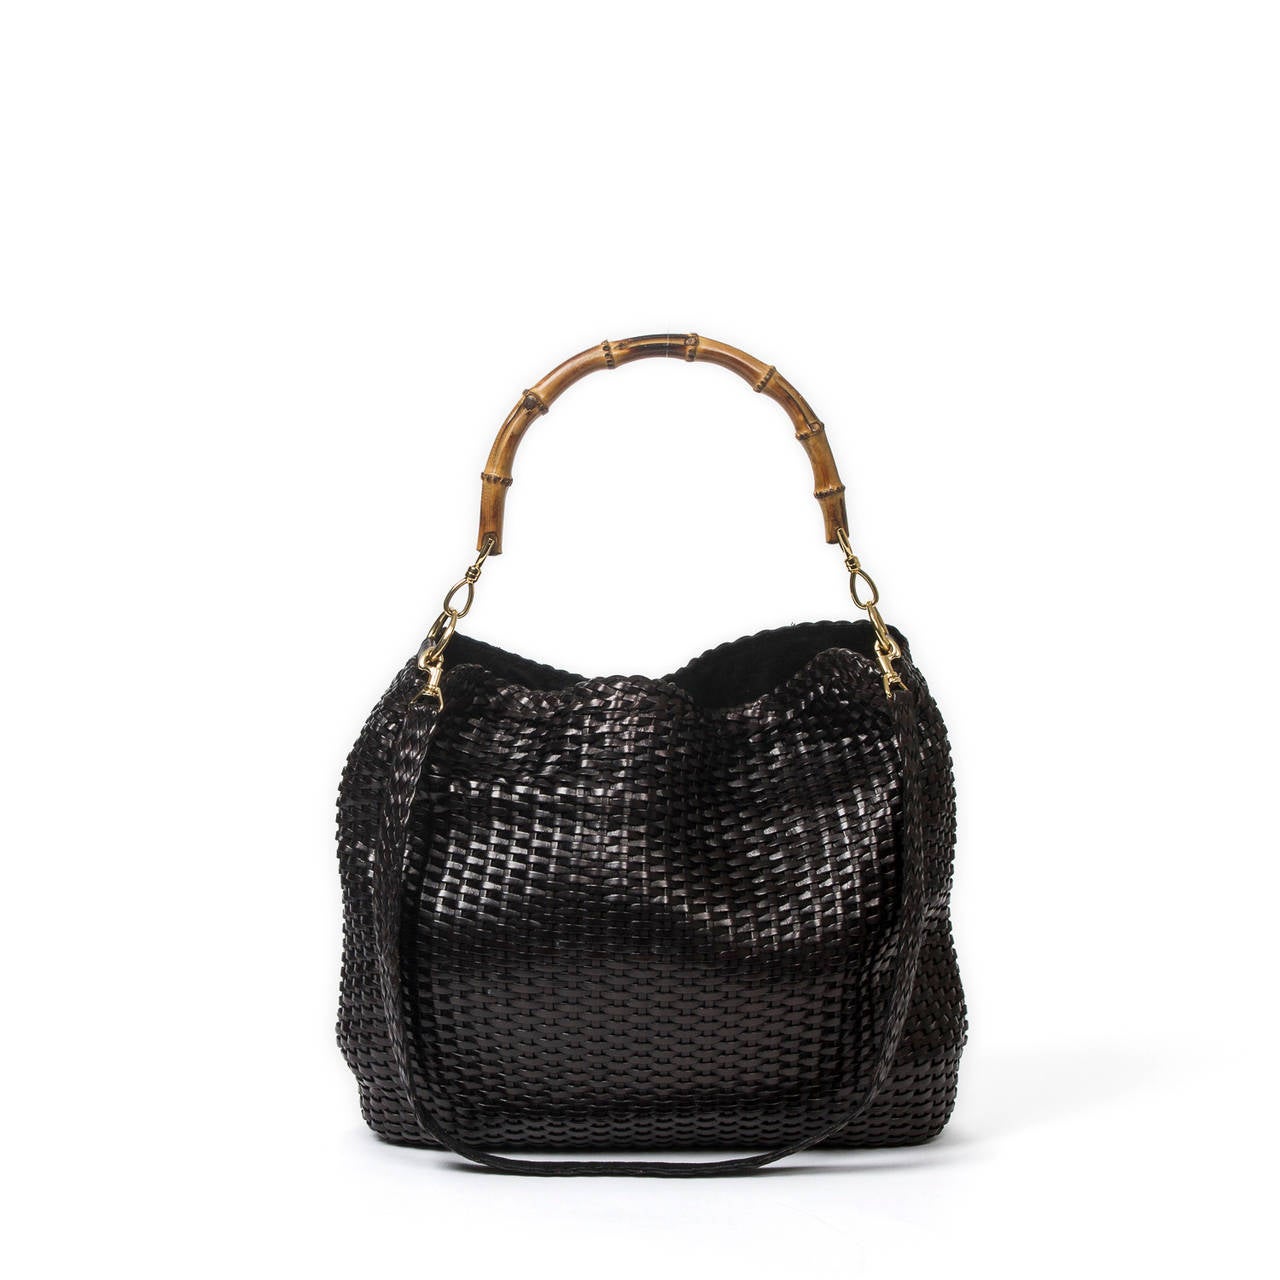 Gucci Bamboo Handbag Black Woven Leather For Sale 1